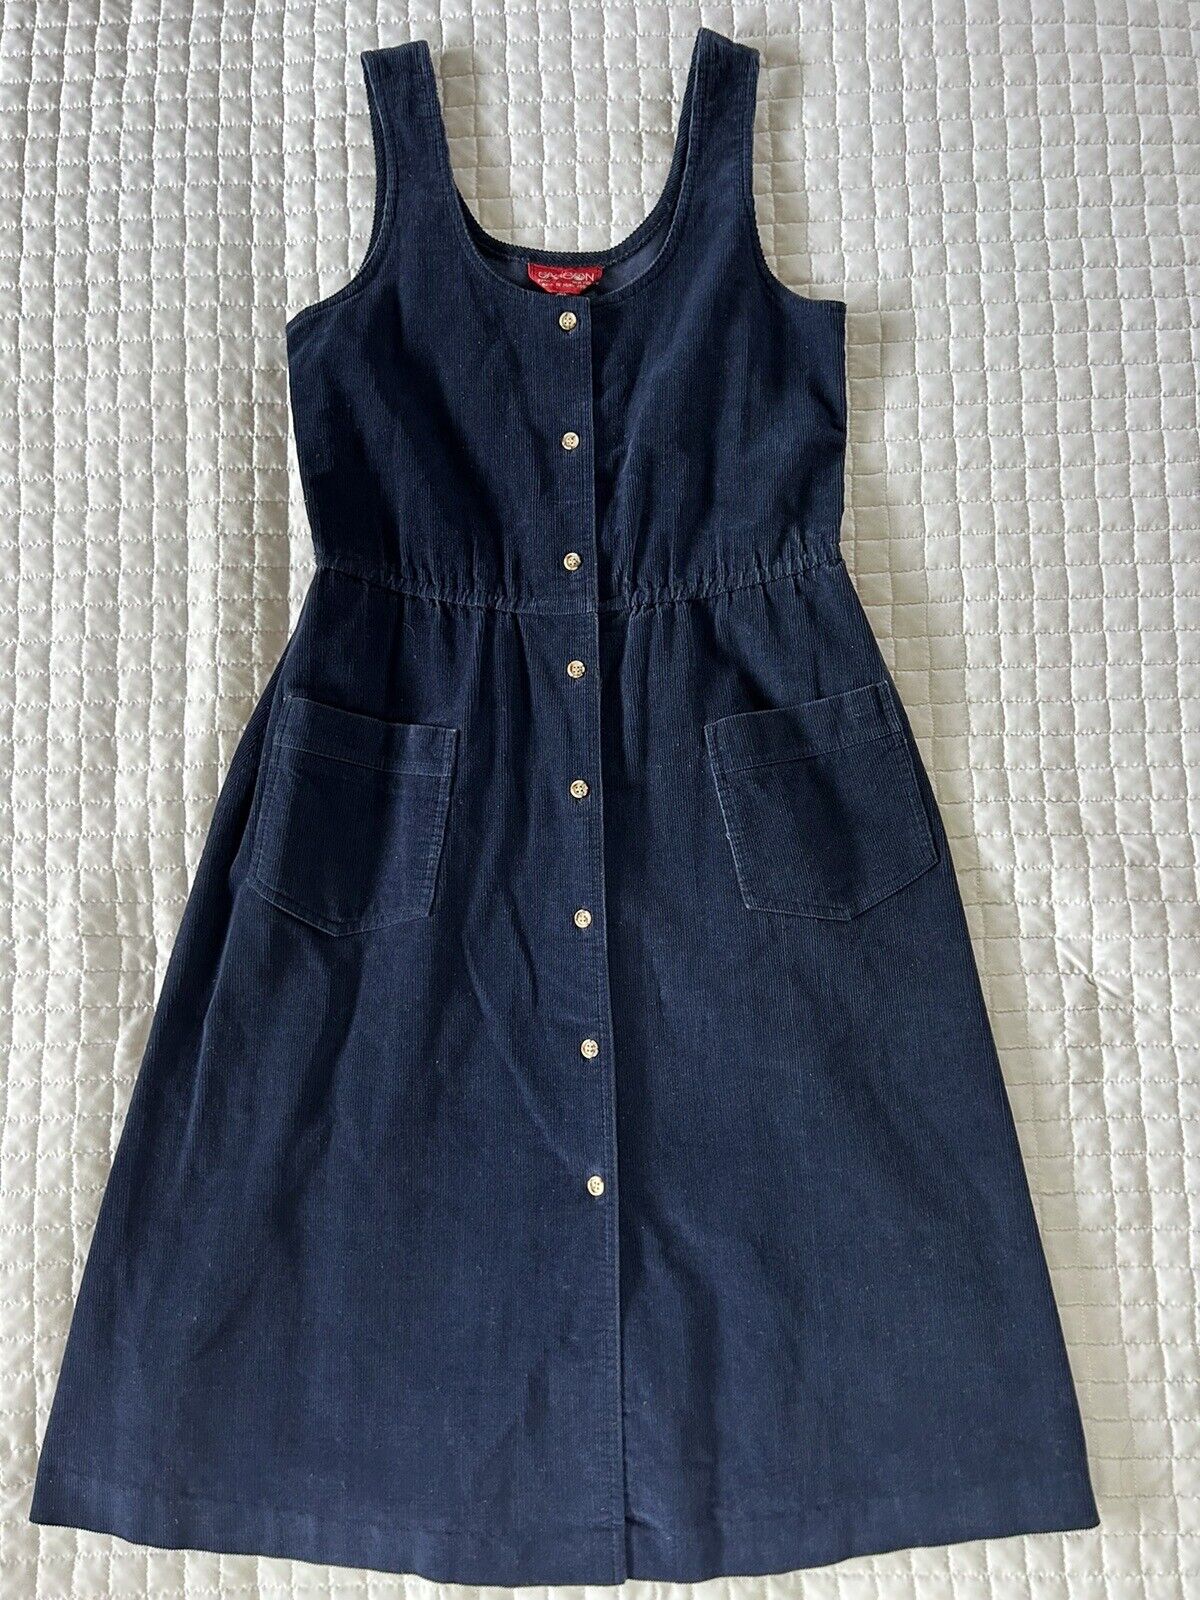 VTG Sasson Corduroy Jumper Dress Button Front Sleeveless Pockets Blue Small Med